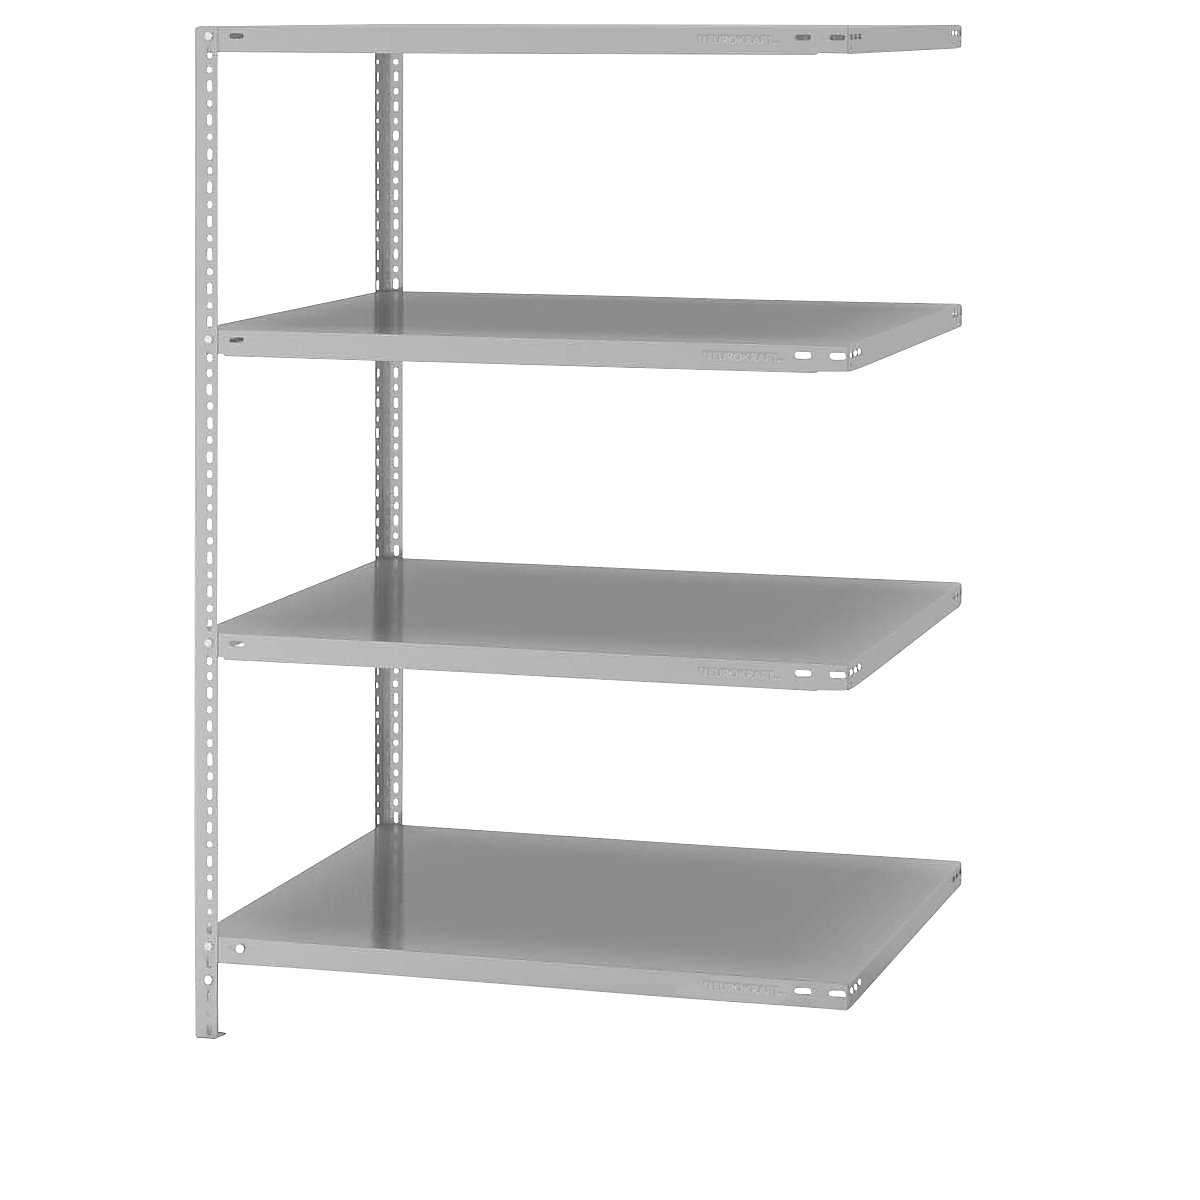 Bolt-together shelf unit, light duty, plastic coated – eurokraft pro, shelf unit height 1500 mm, shelf width 1000 mm, depth 800 mm, extension shelf unit-9